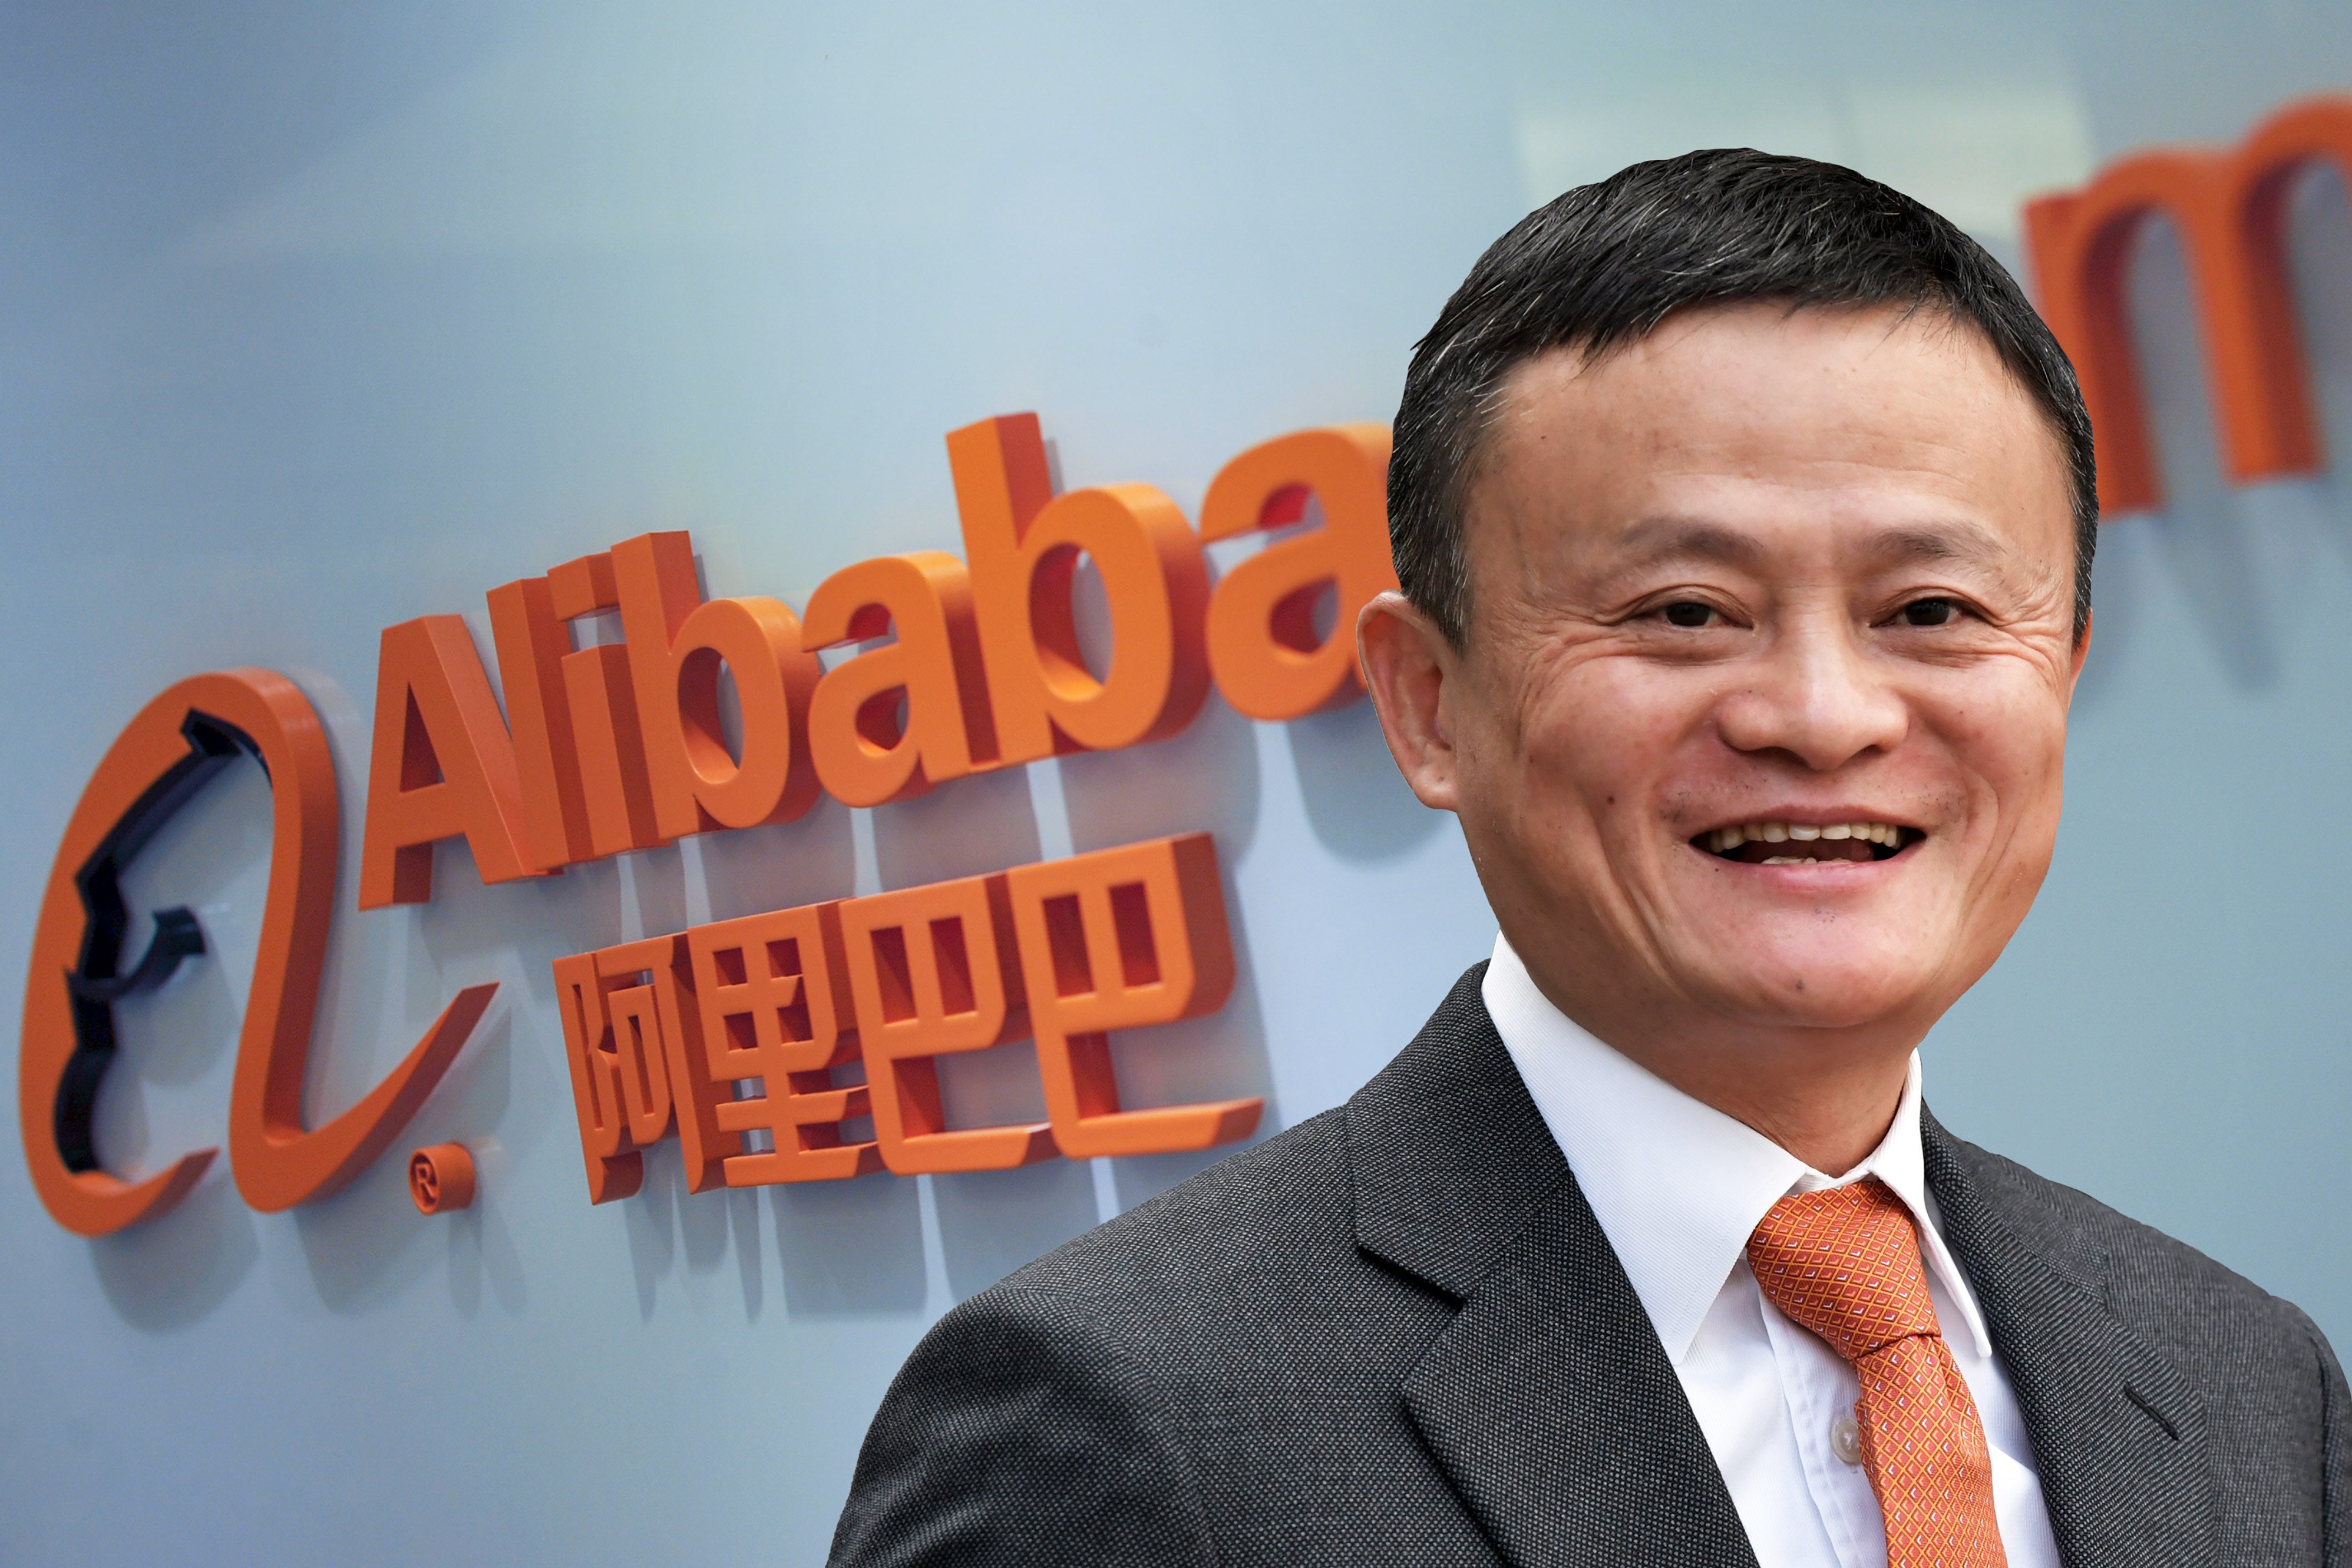 Alibaba. Alibaba (компания, владеющая ALIEXPRESS) Джек ма. Али баба компания Китай Википедия. Jack ma Alibaba 1999 in Hangzhou. Кто такой Alibaba.